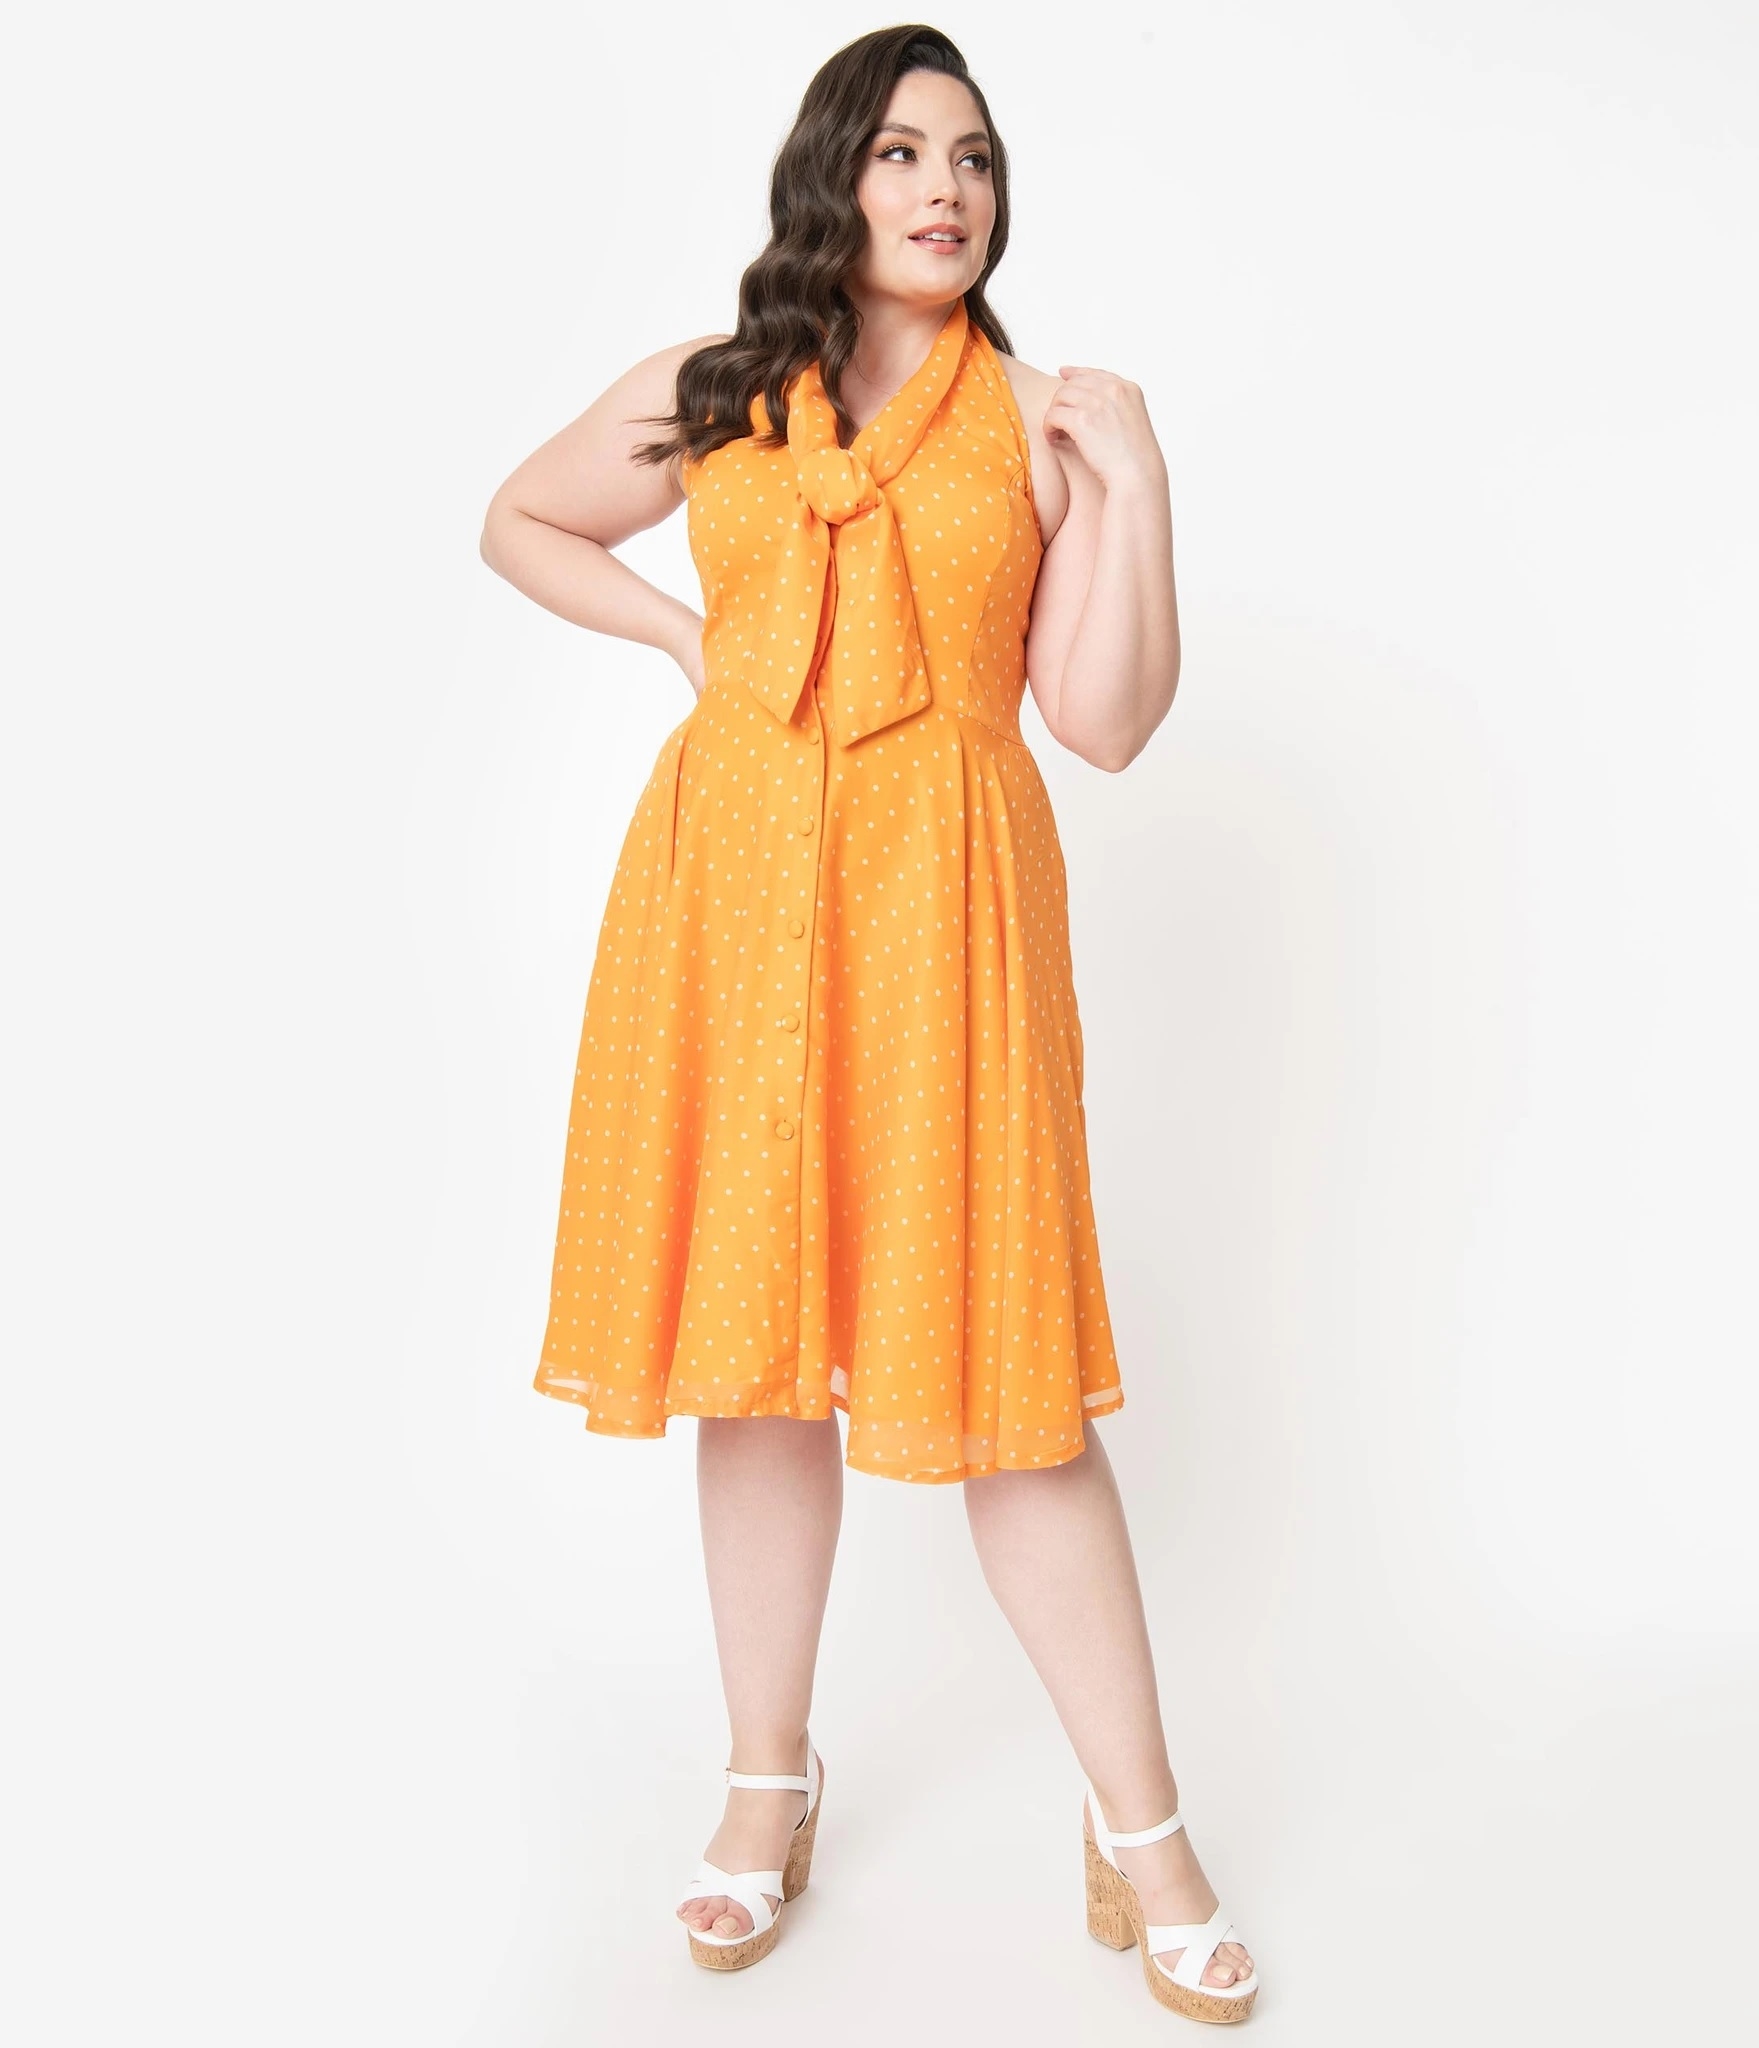 evne teknisk Potentiel 50´er kjole - Trinity: Orange/gul kjole med polka prikker